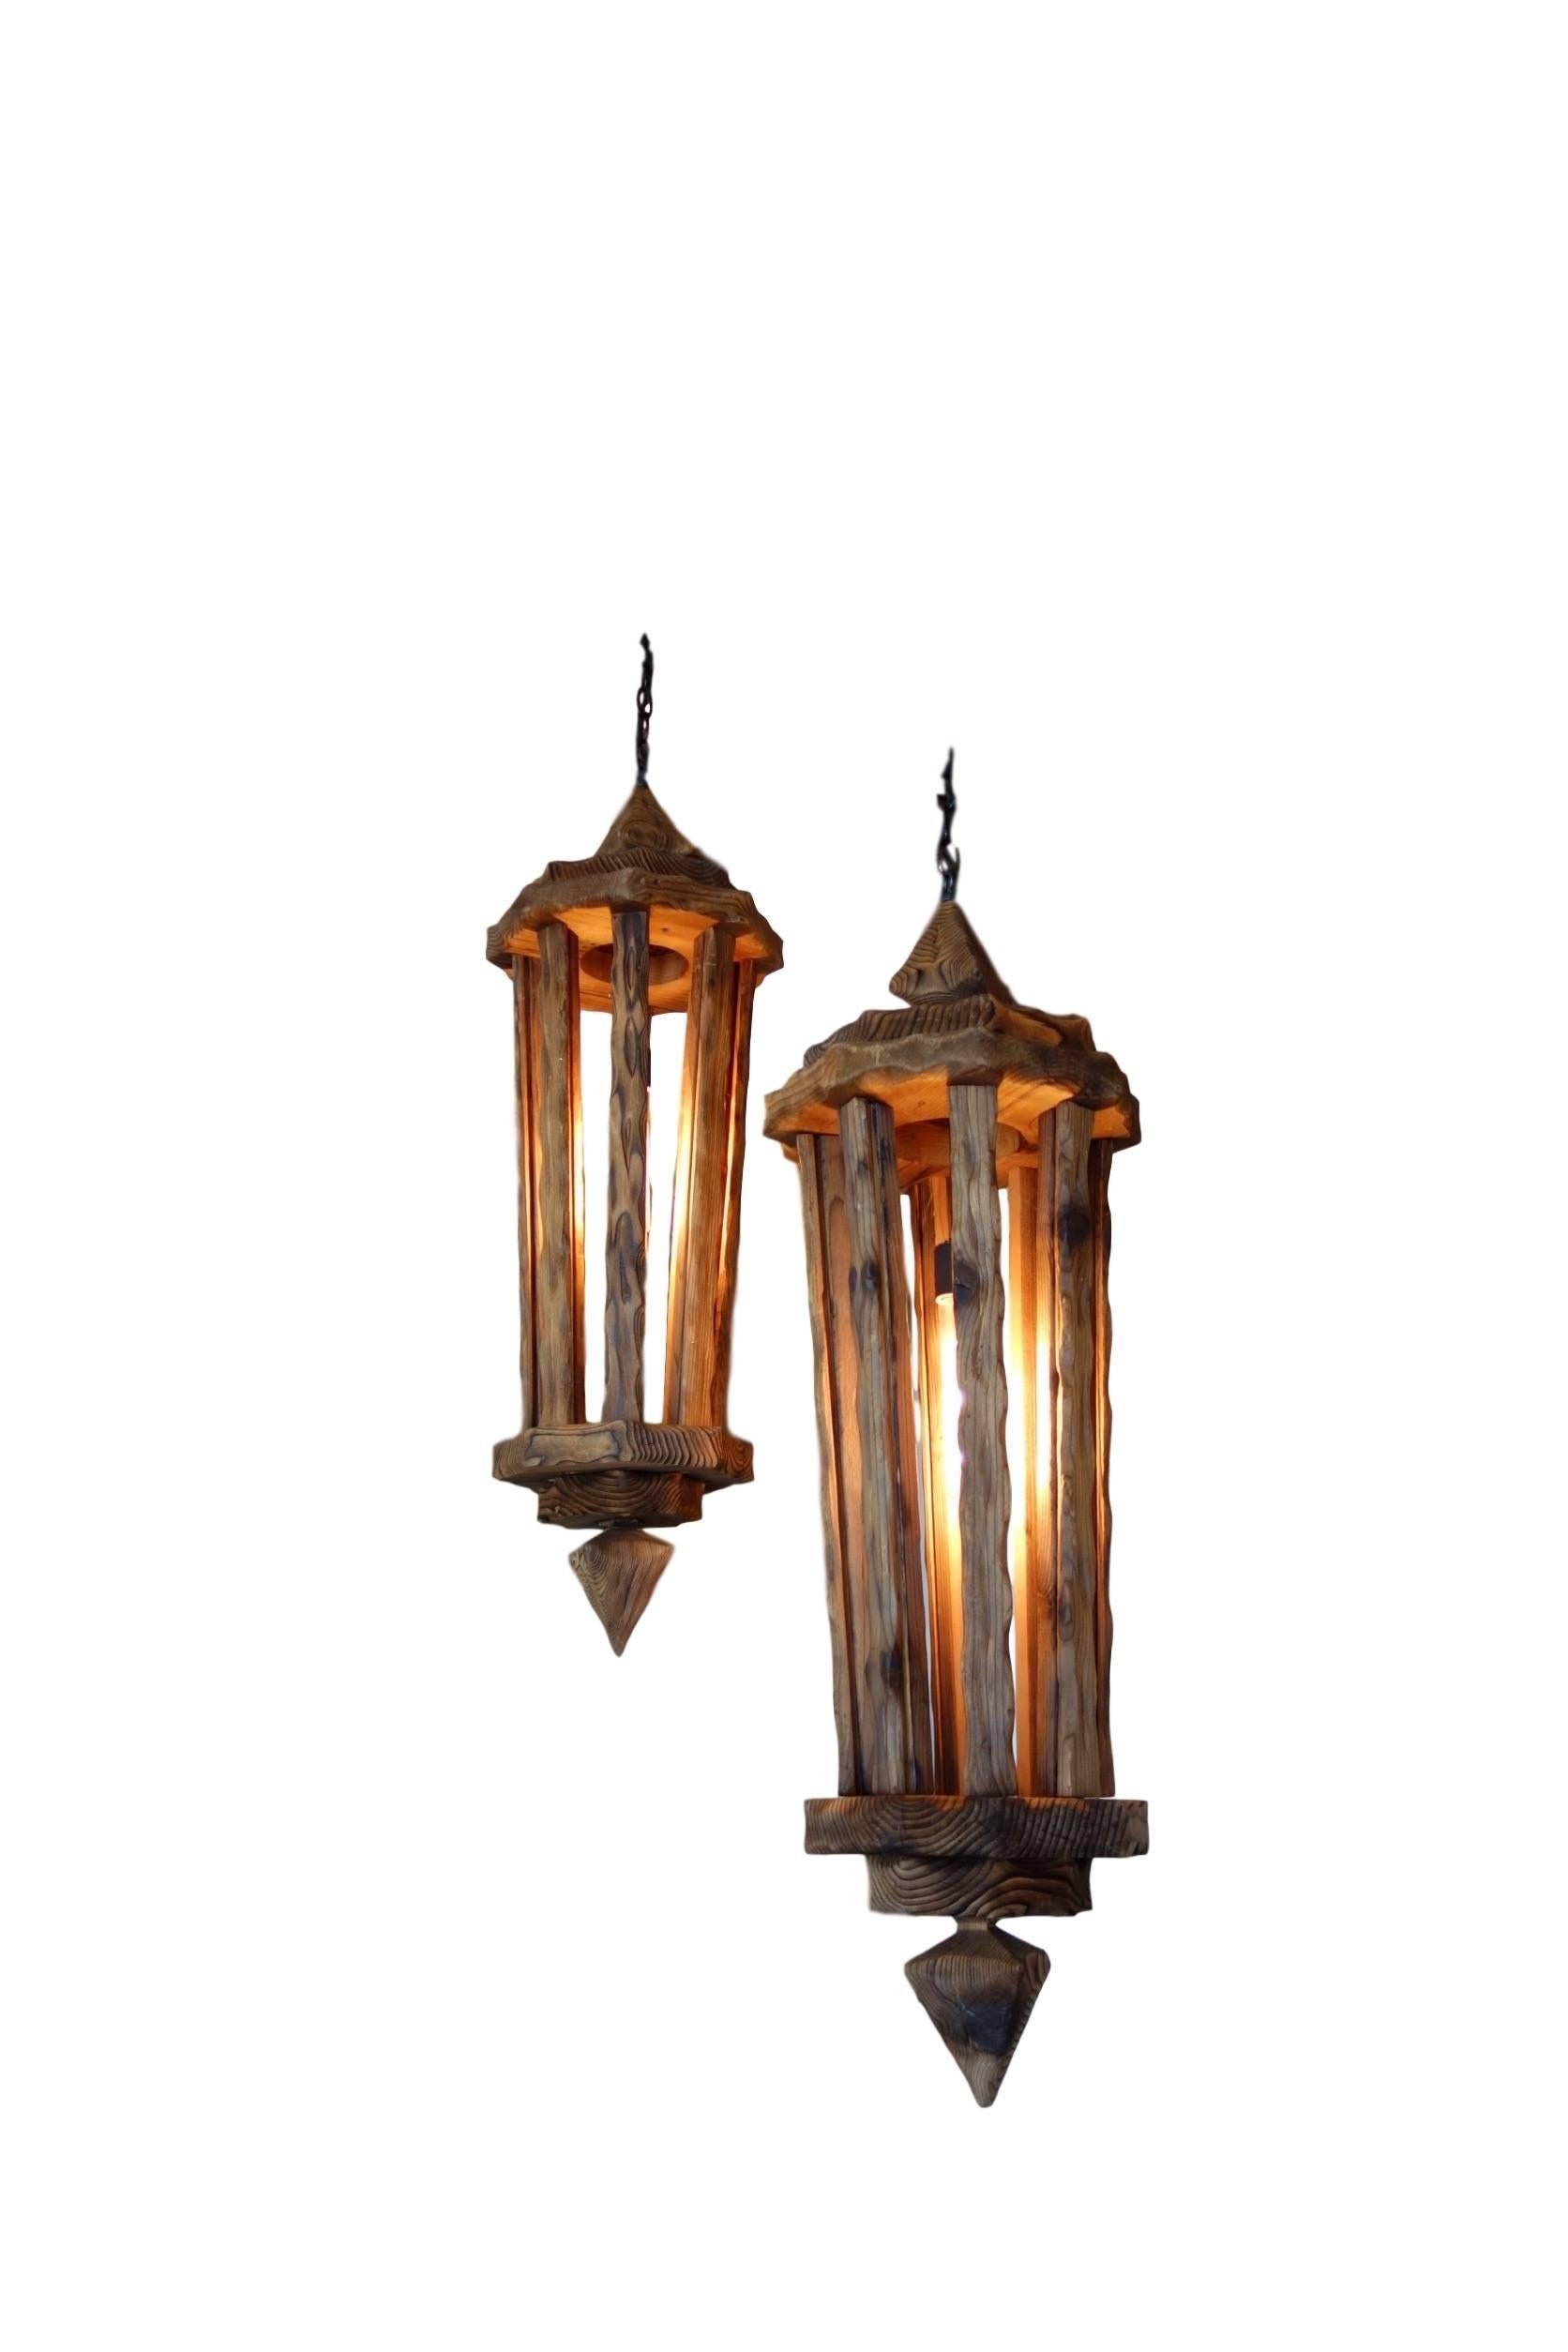 This is a pair of studio craft rustic lanterns, circa 1970.